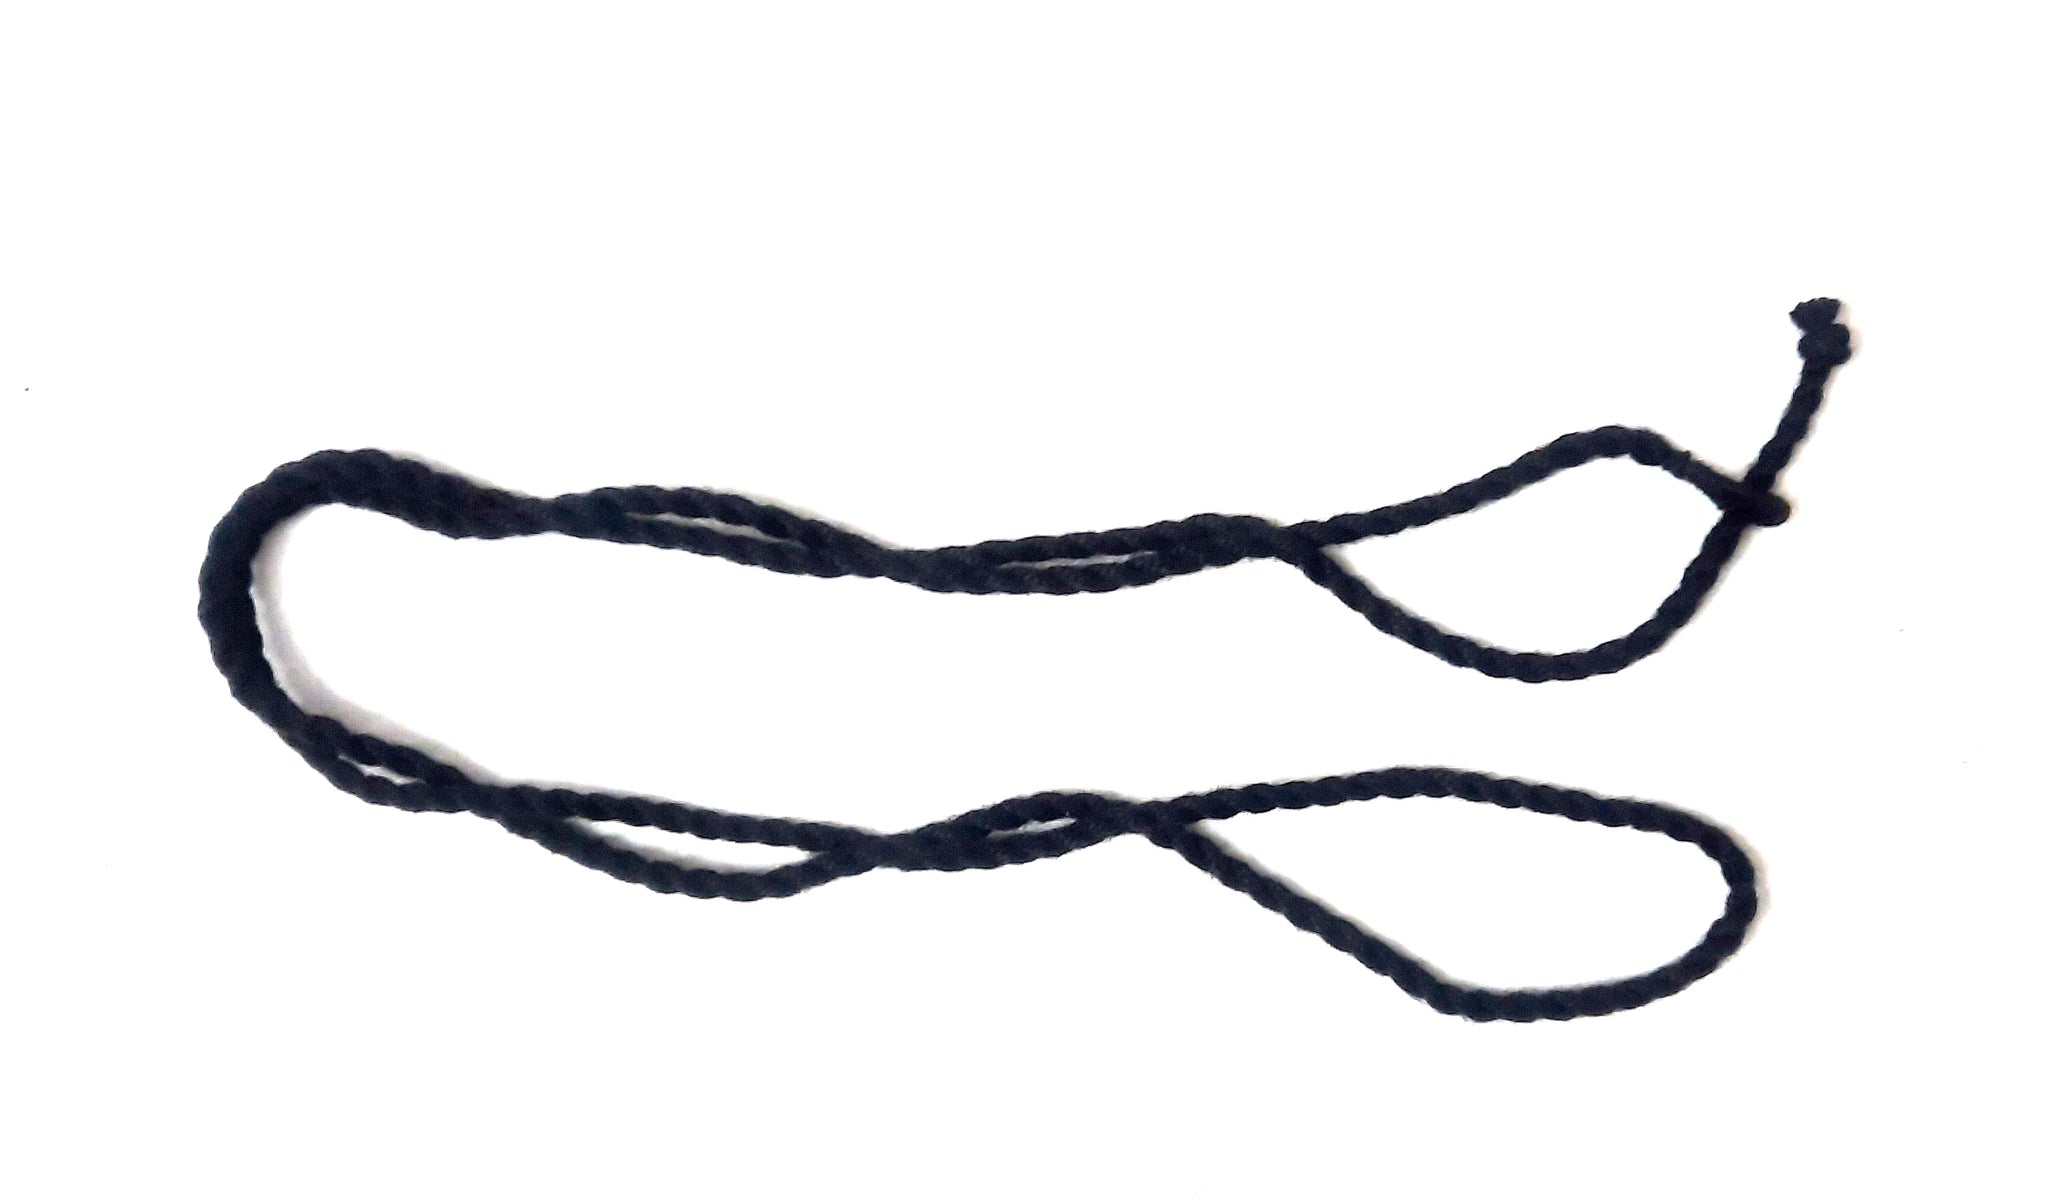 Buy Cotton Dori / Necklace Cord / Rope in Black